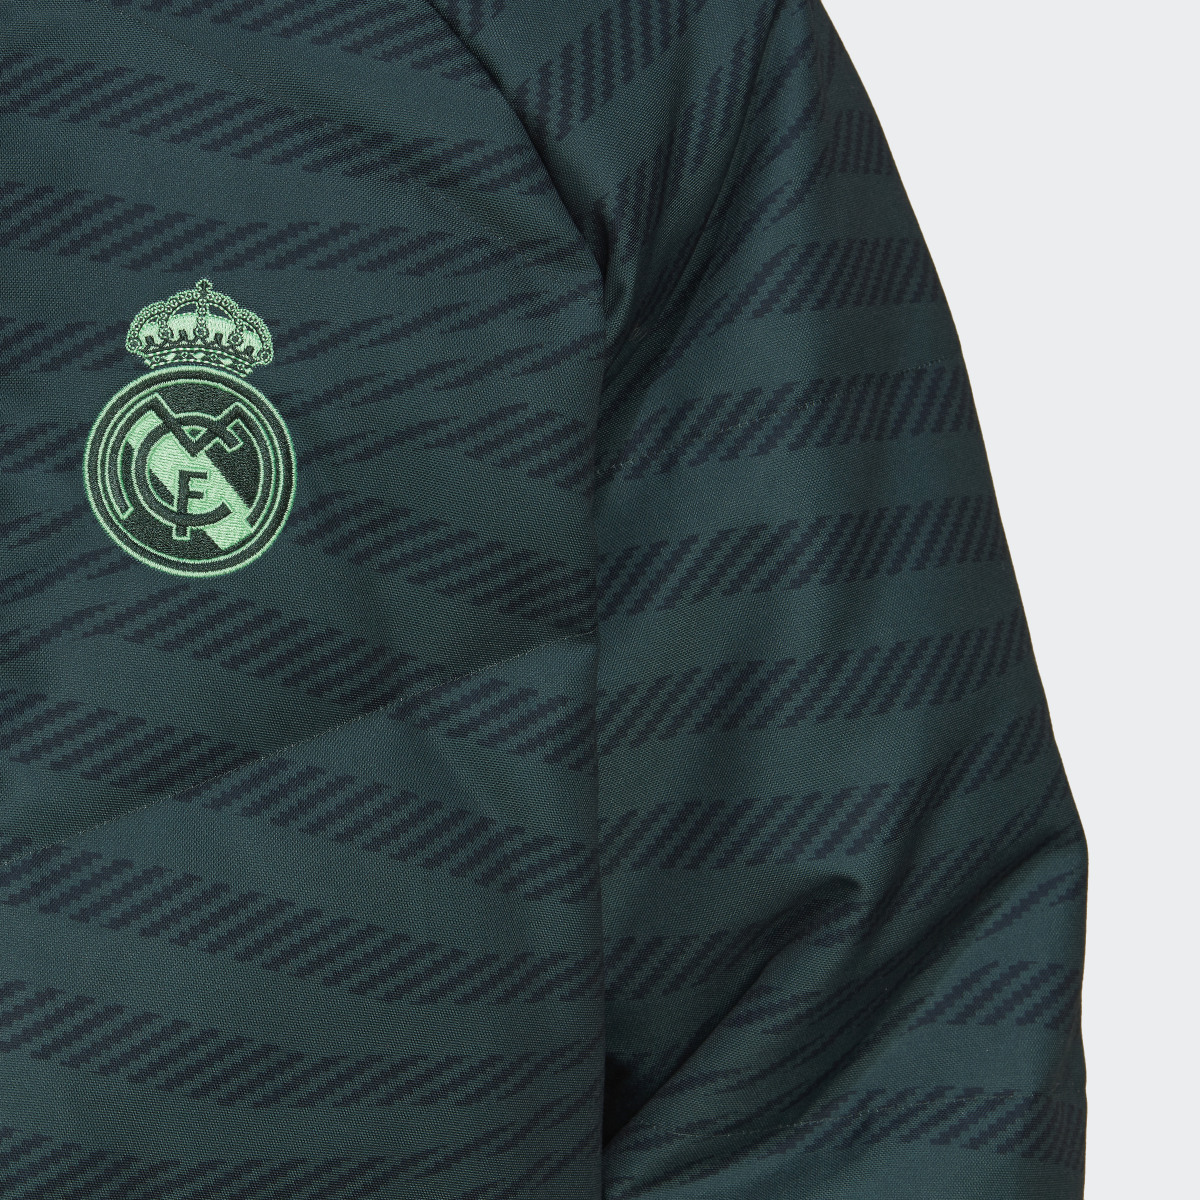 Adidas Abrigo plumón Real Madrid. 6